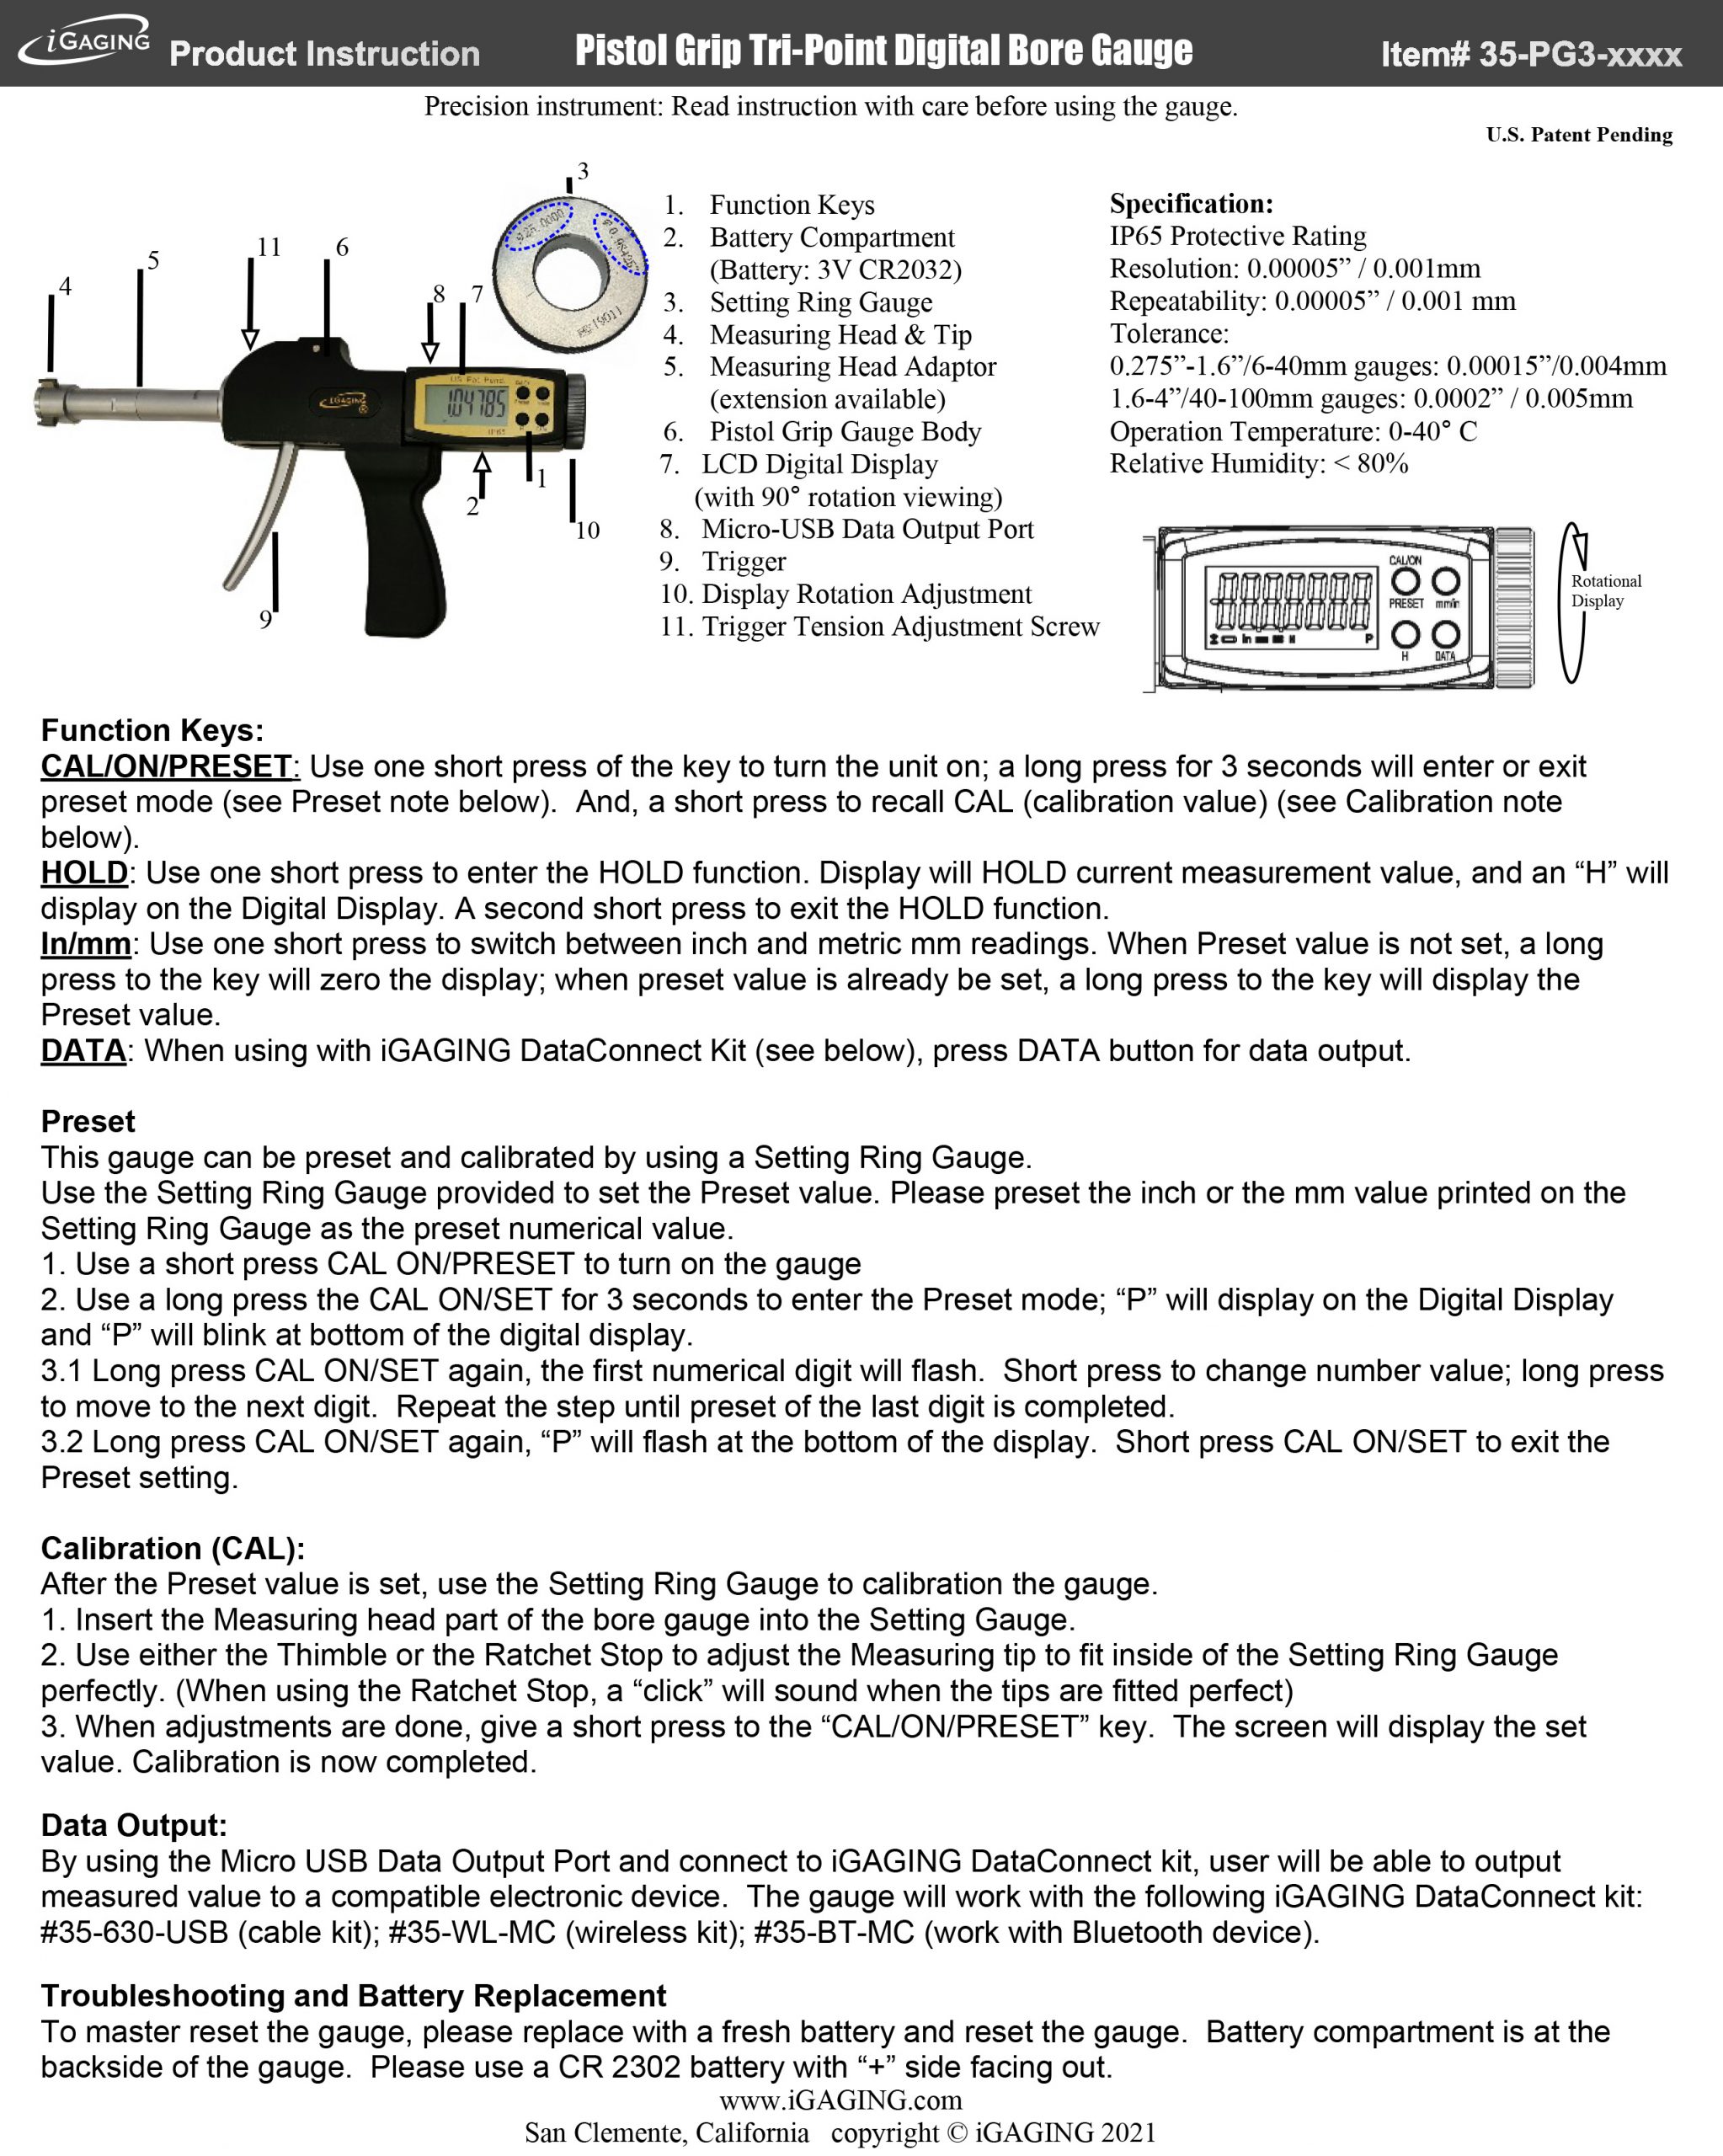 Tri Point Pistol Grip Internal Micrometer 0.35-.0425"/8-10mm